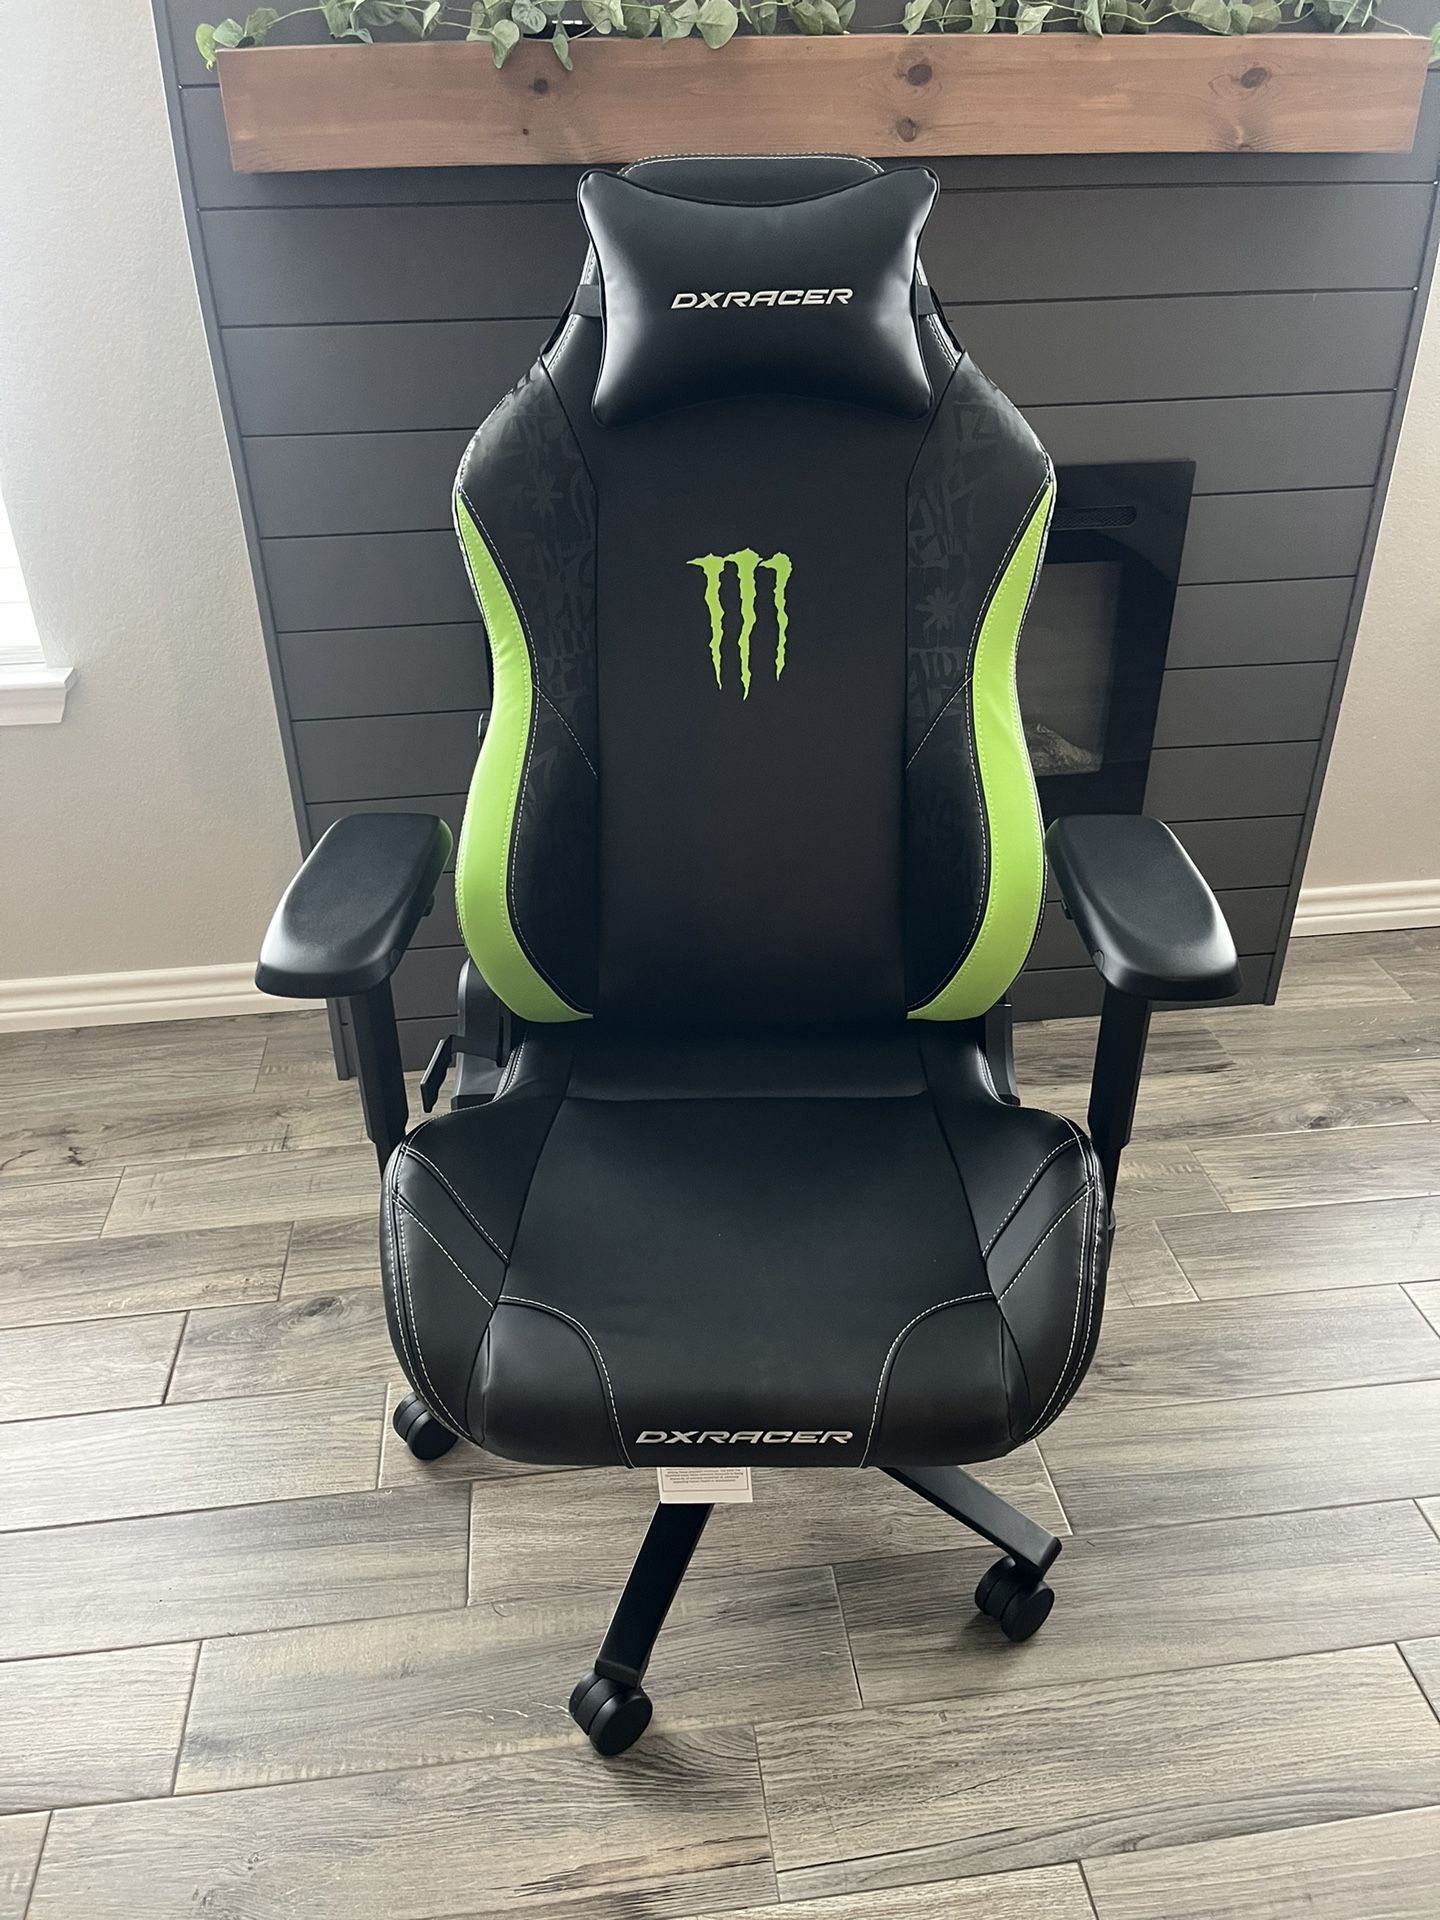 Monster DxRacer Gaming/office Chair 